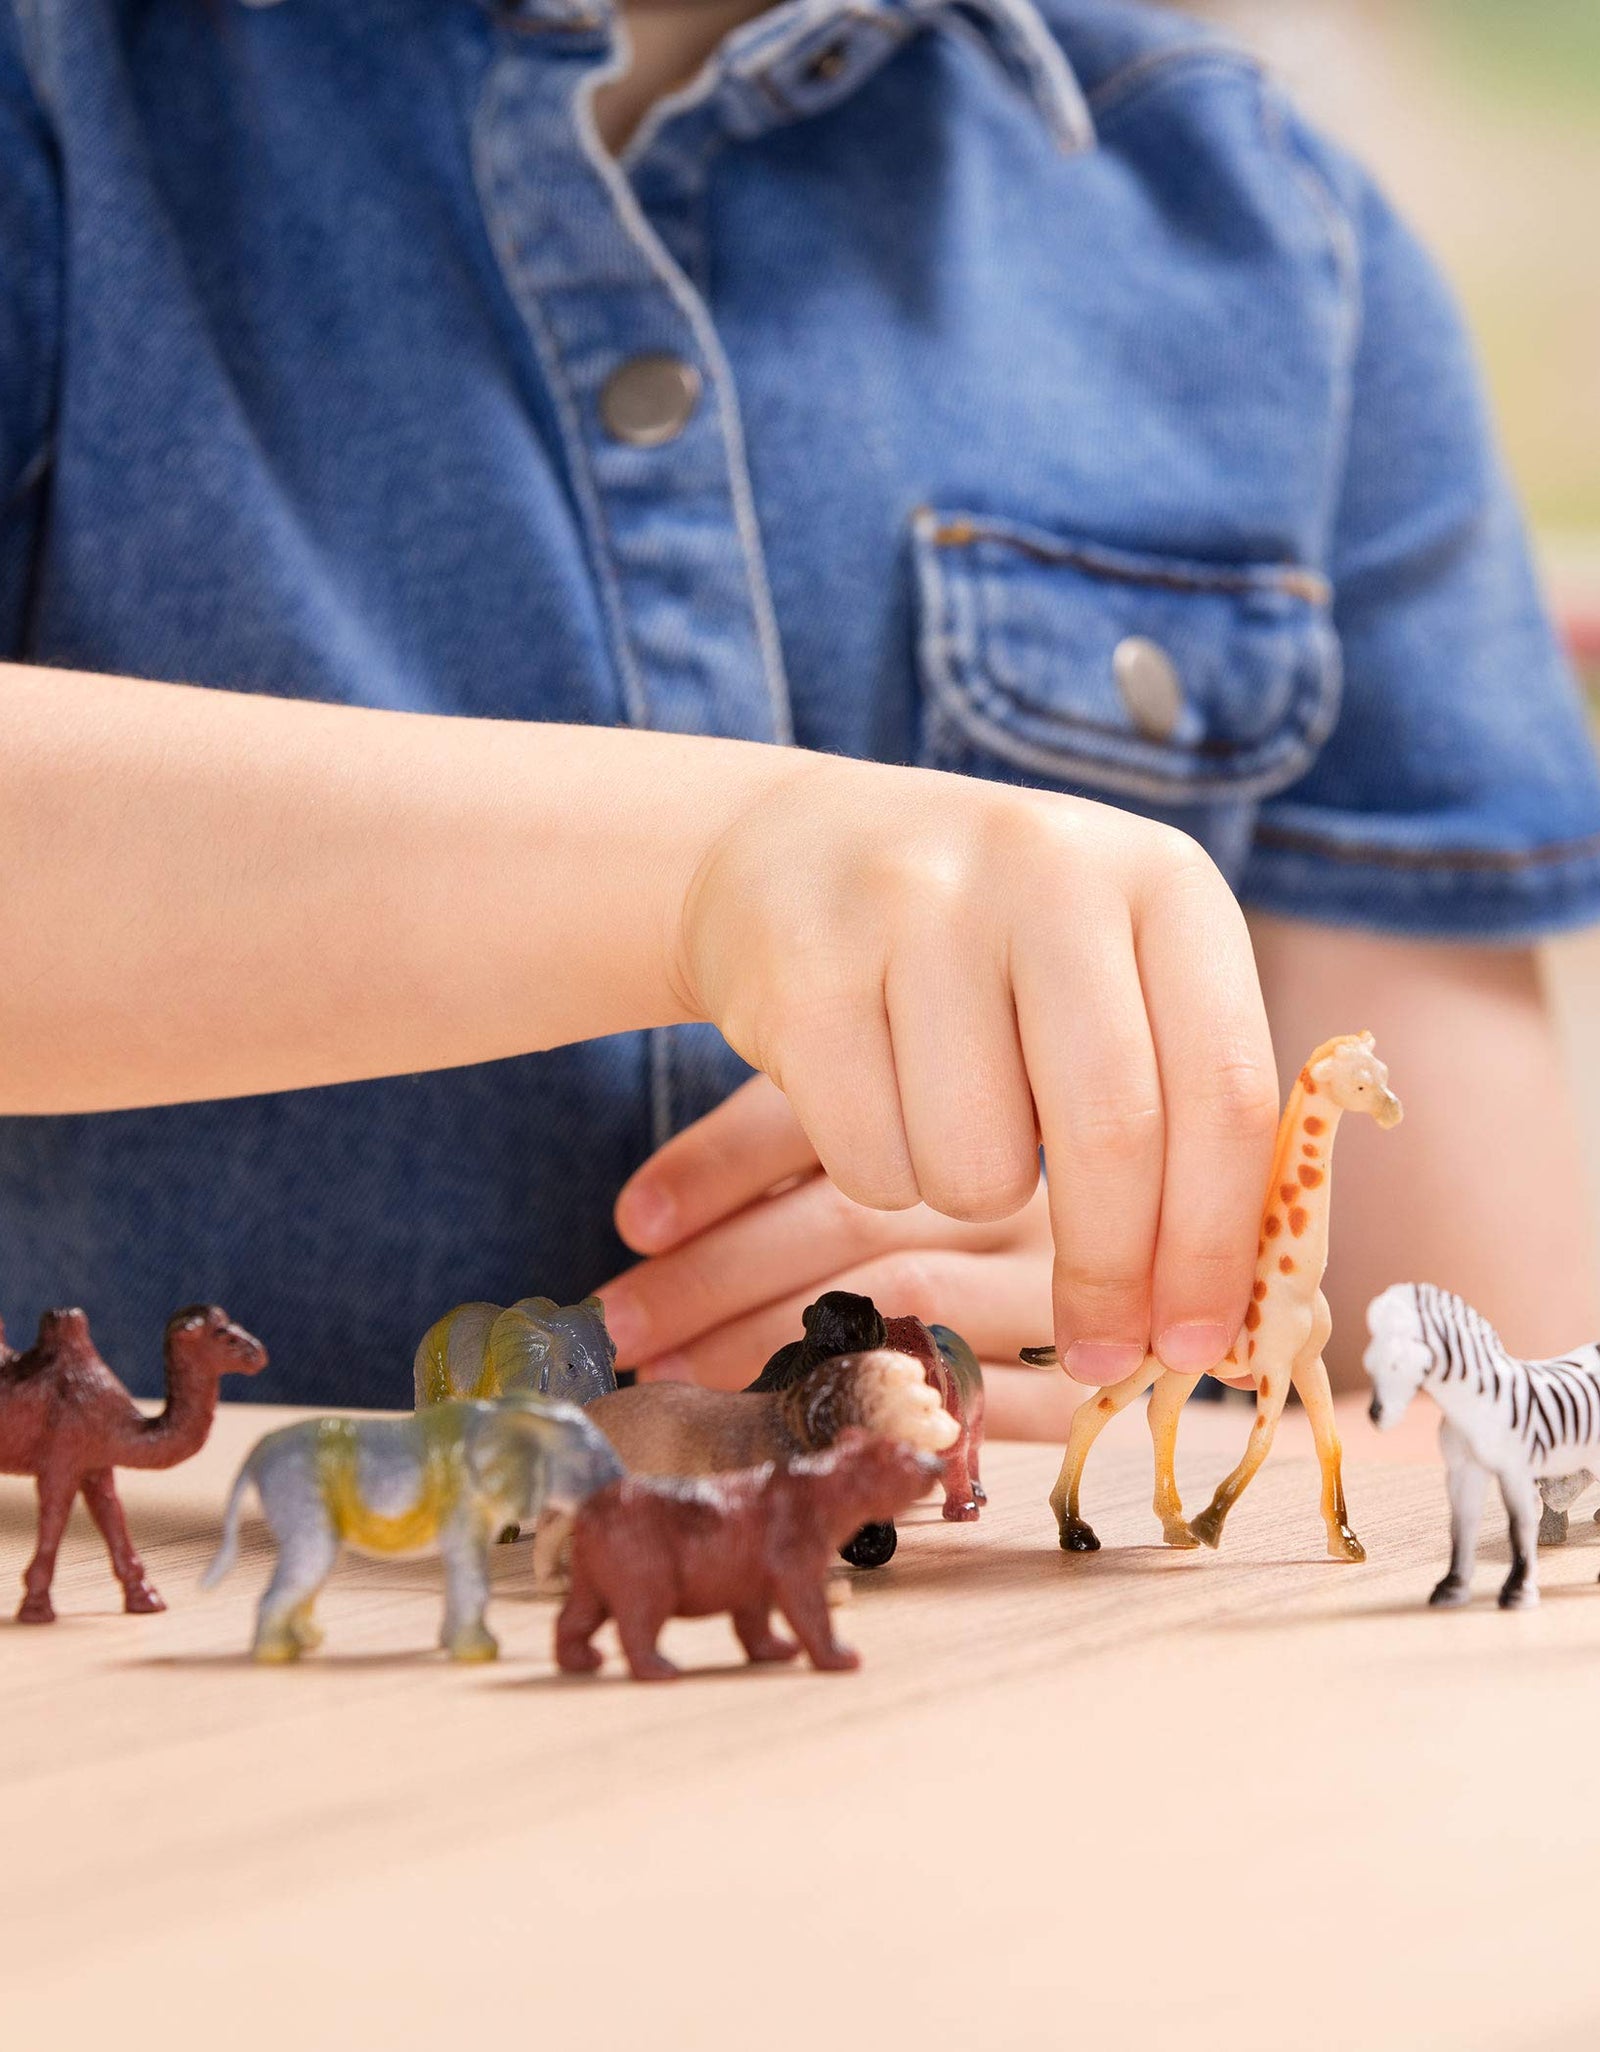 Terra by Battat – Wild Animals – Assorted Miniature Wild Animal Toys For Kids 3+ (60 Pc) Multi, 2"